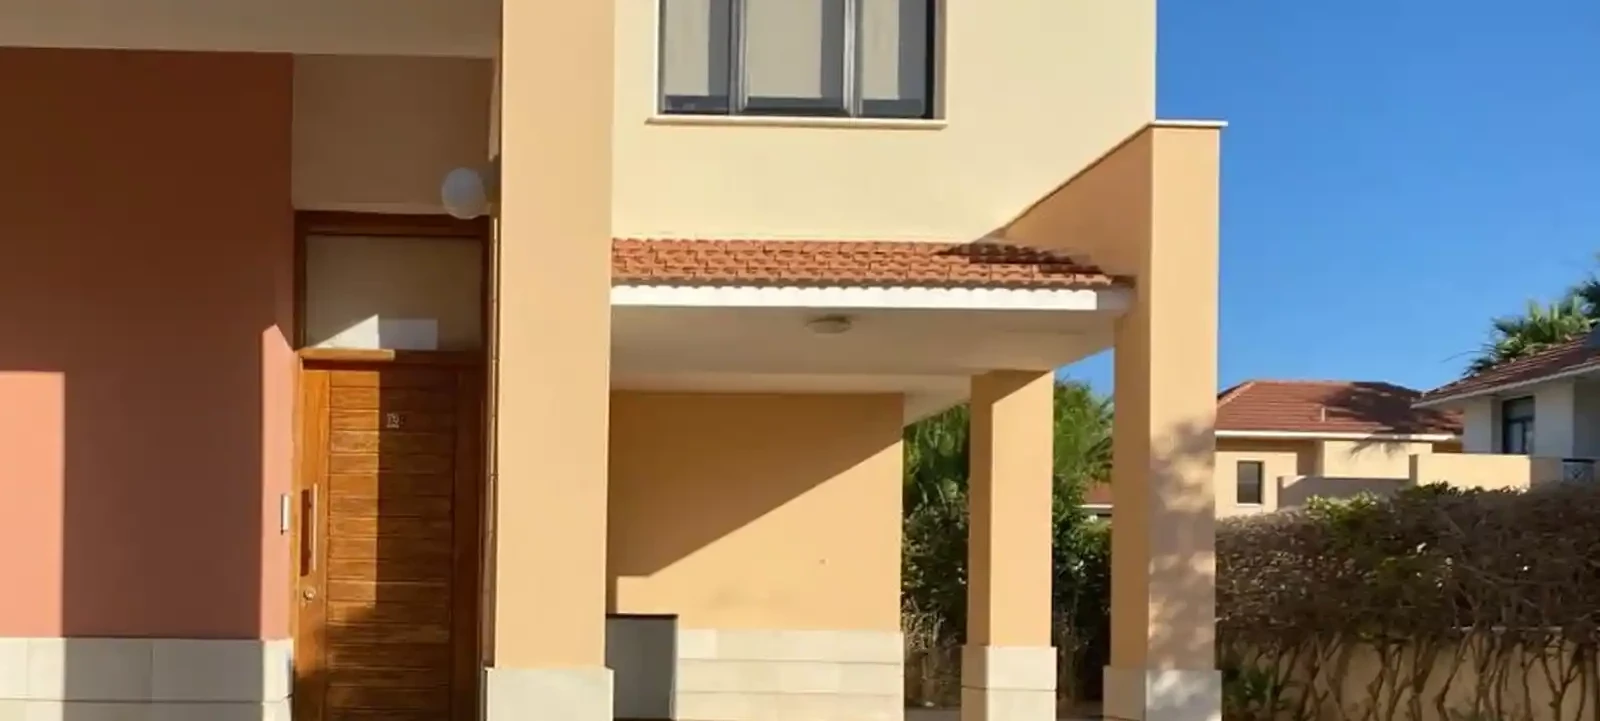 4-bedroom villa fоr sаle €800.000, image 1